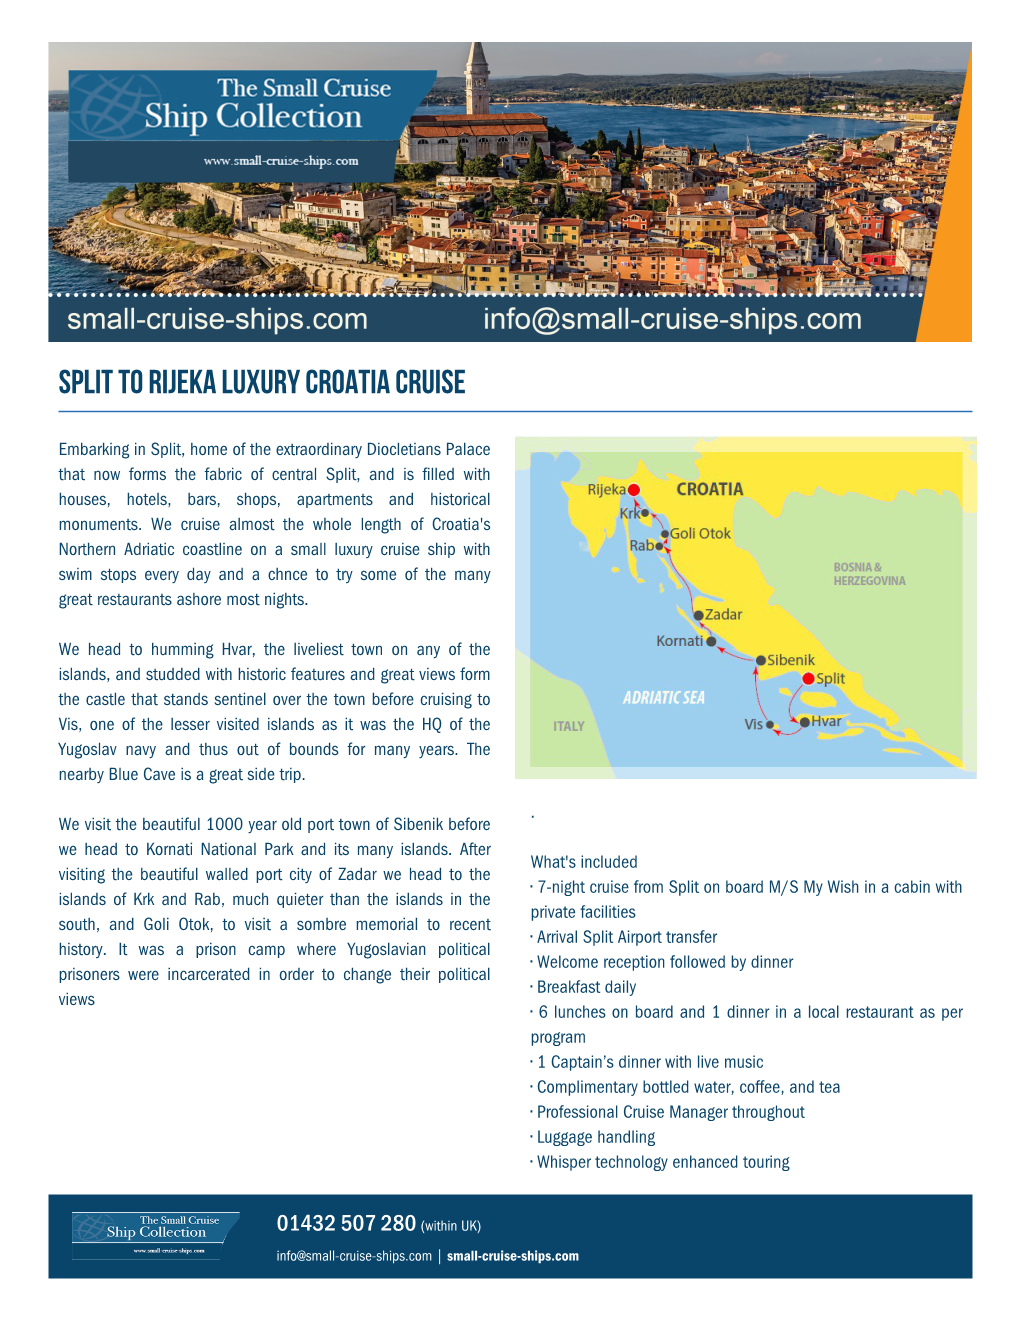 Split to Rijeka Luxury Croatia Cruise